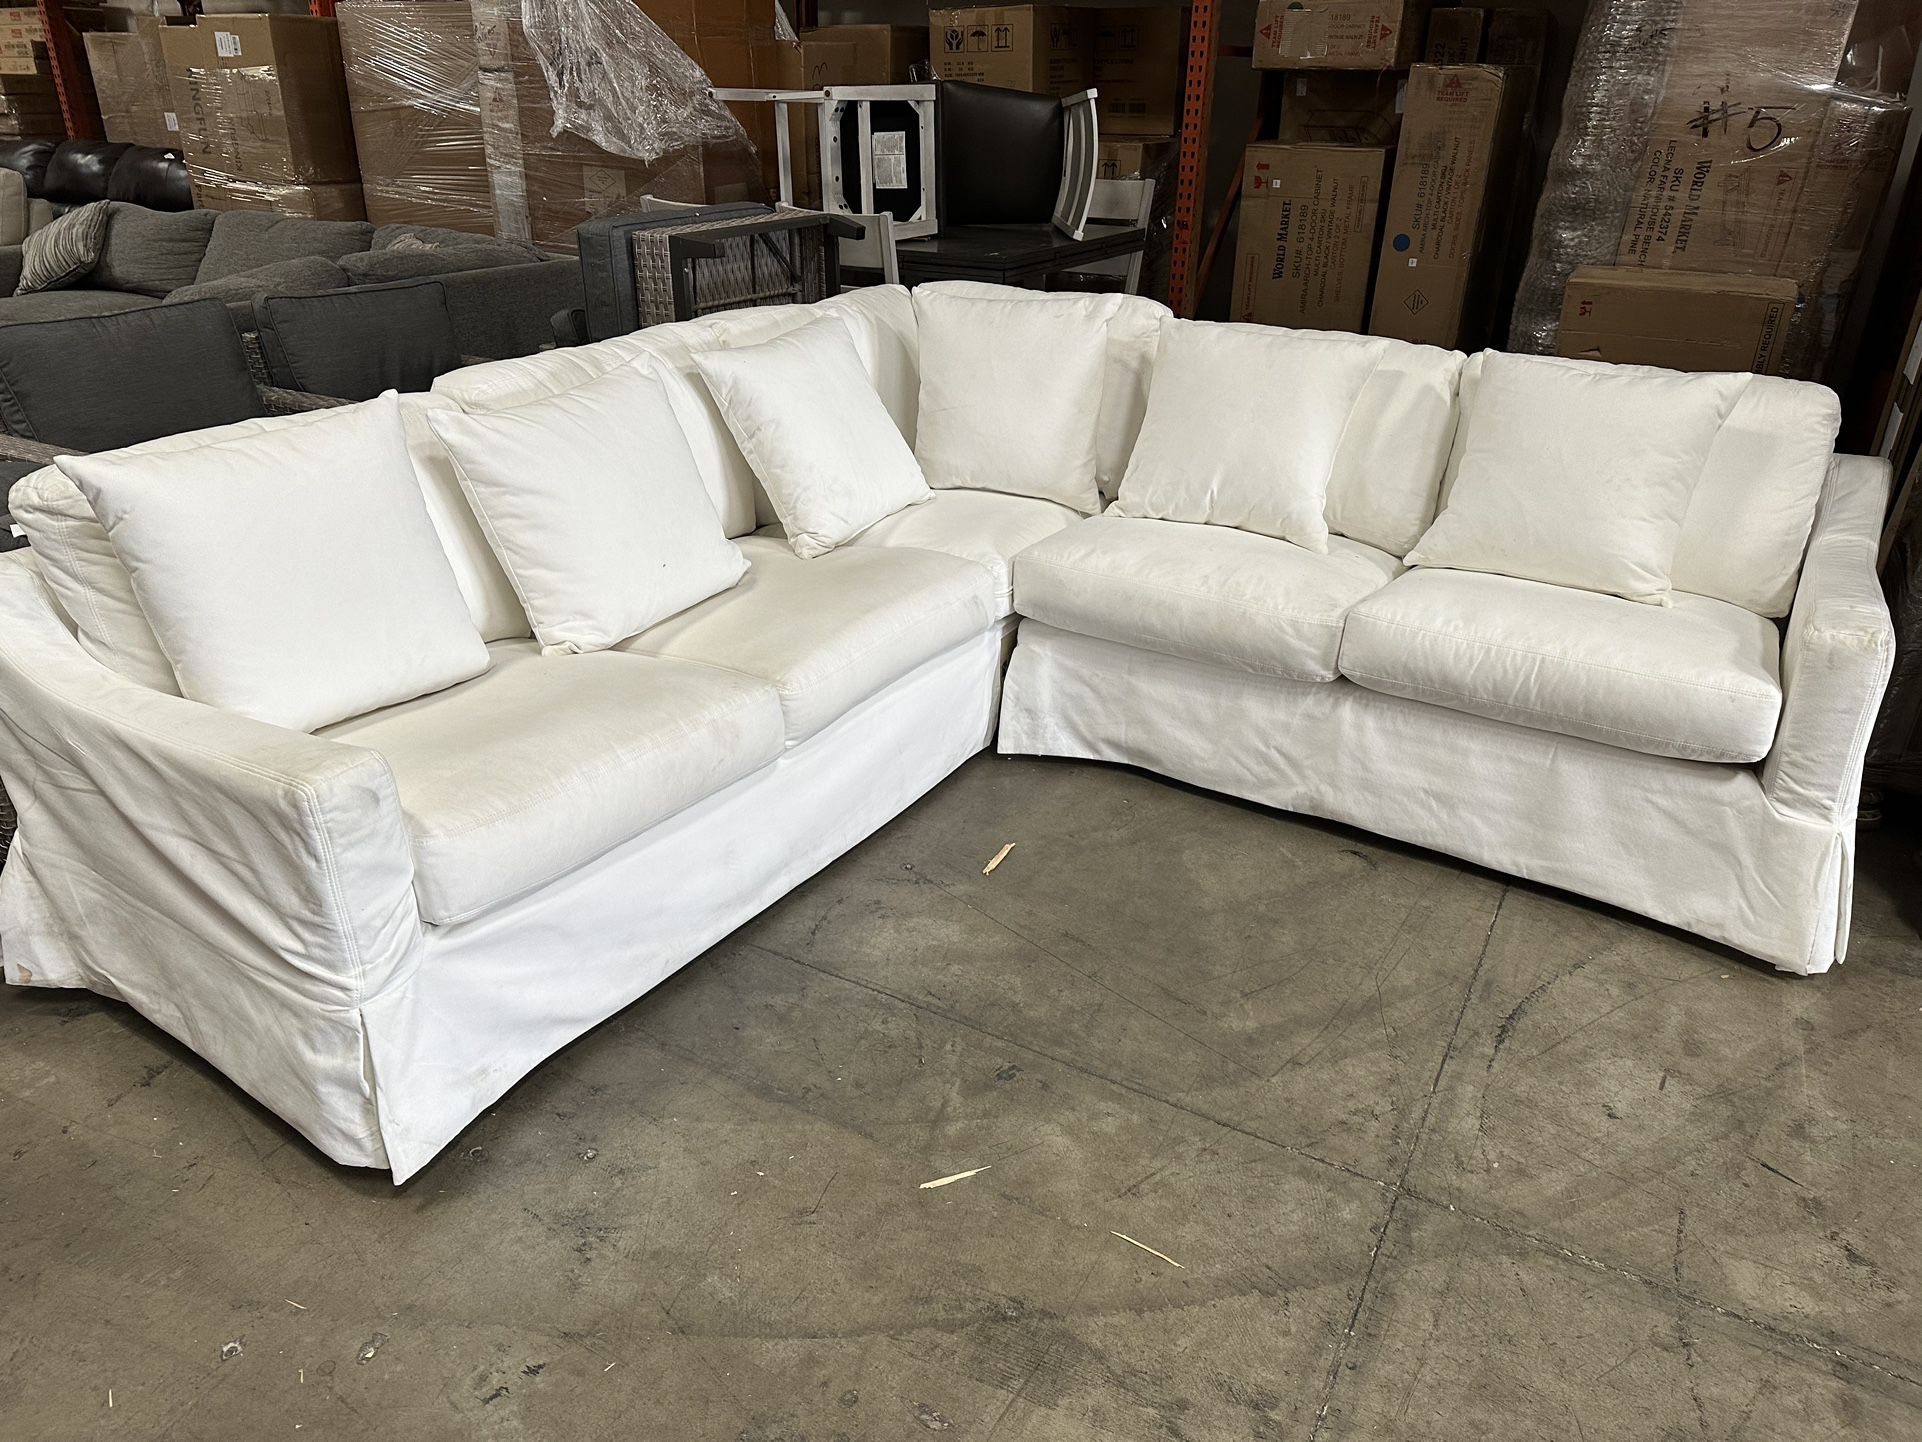 White Sectional Sofa: $380